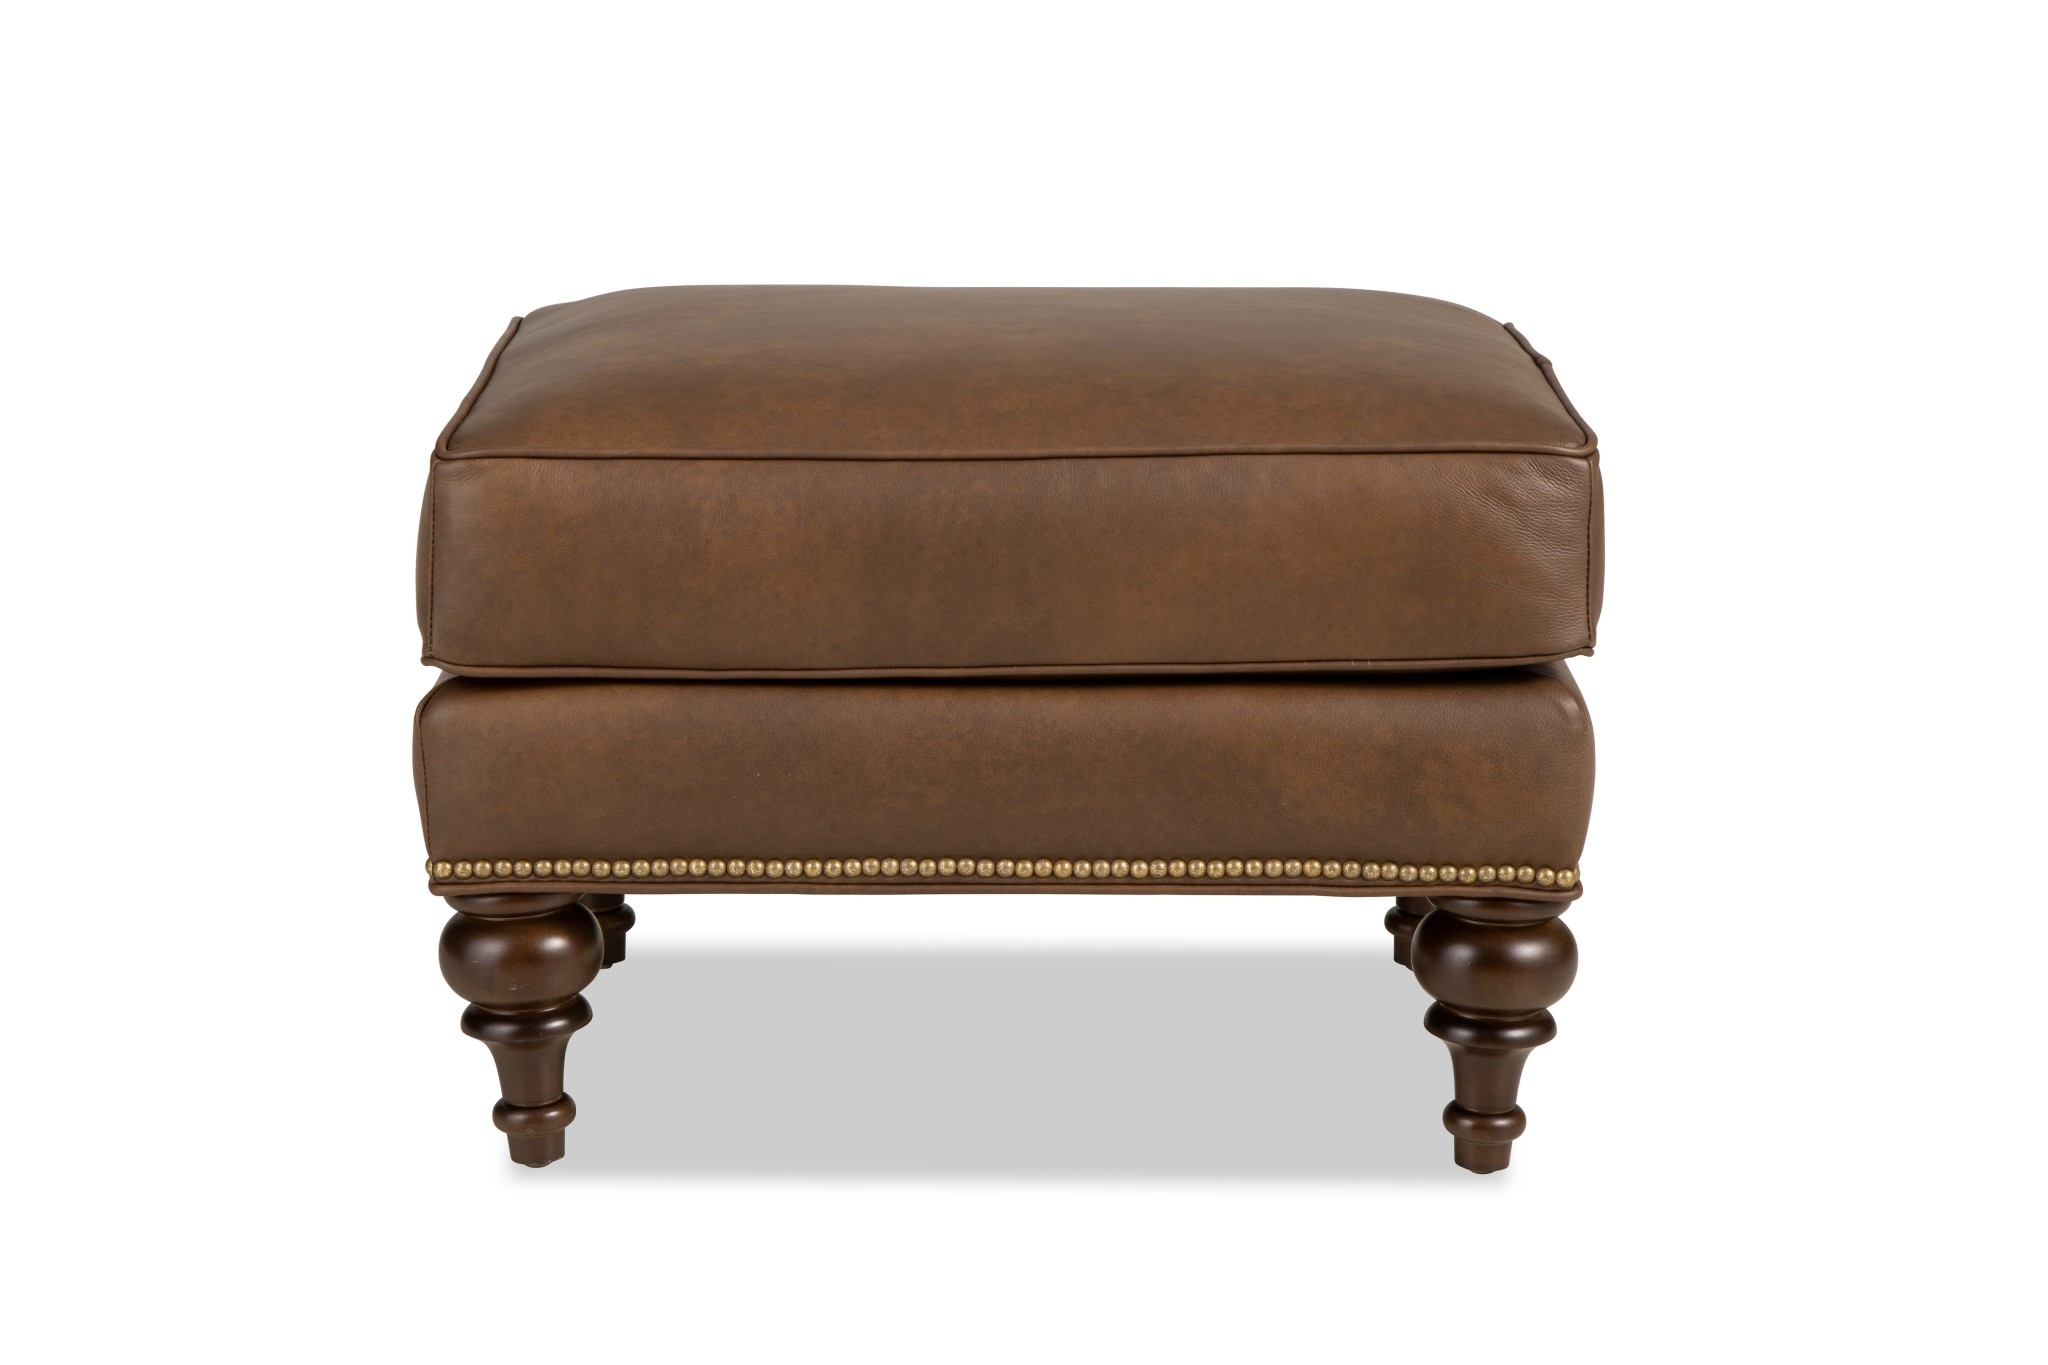 Craftmaster Furniture L028200BD Ottoman